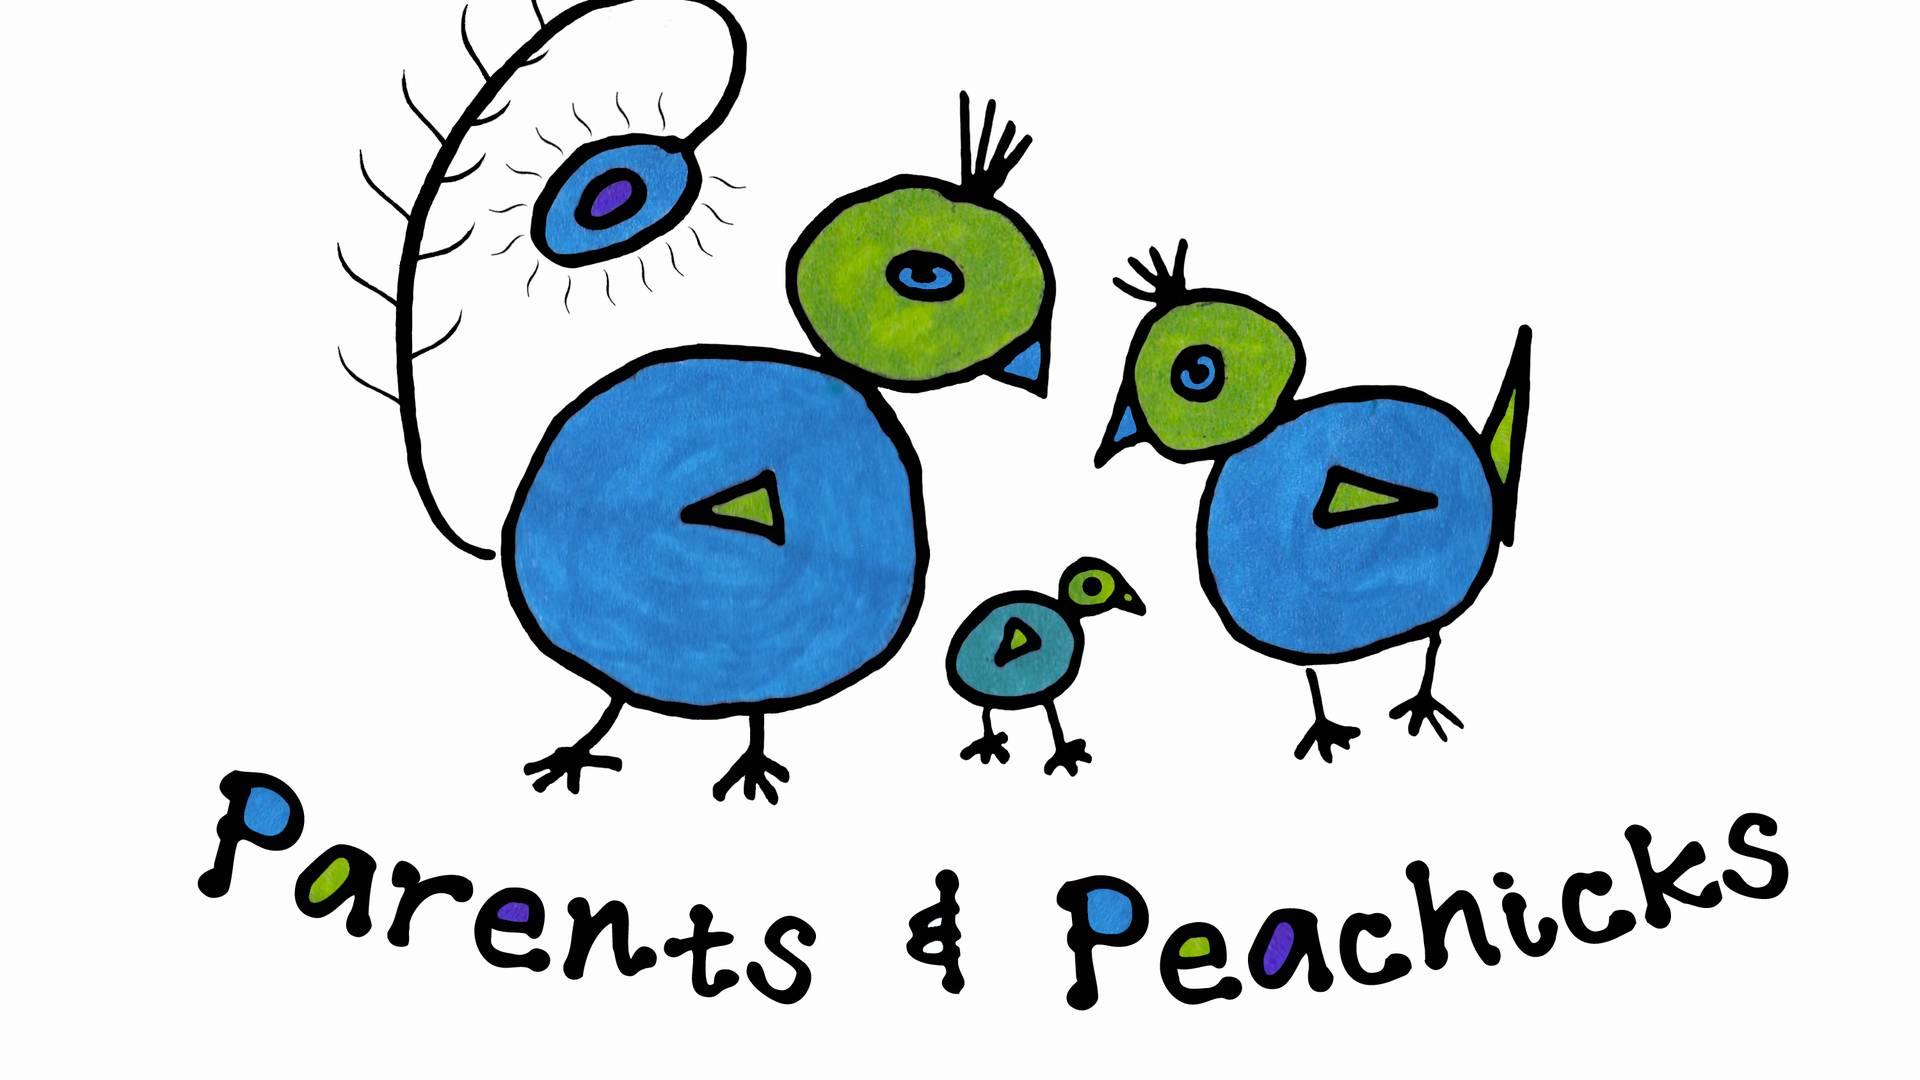 Parents & Peachicks photo